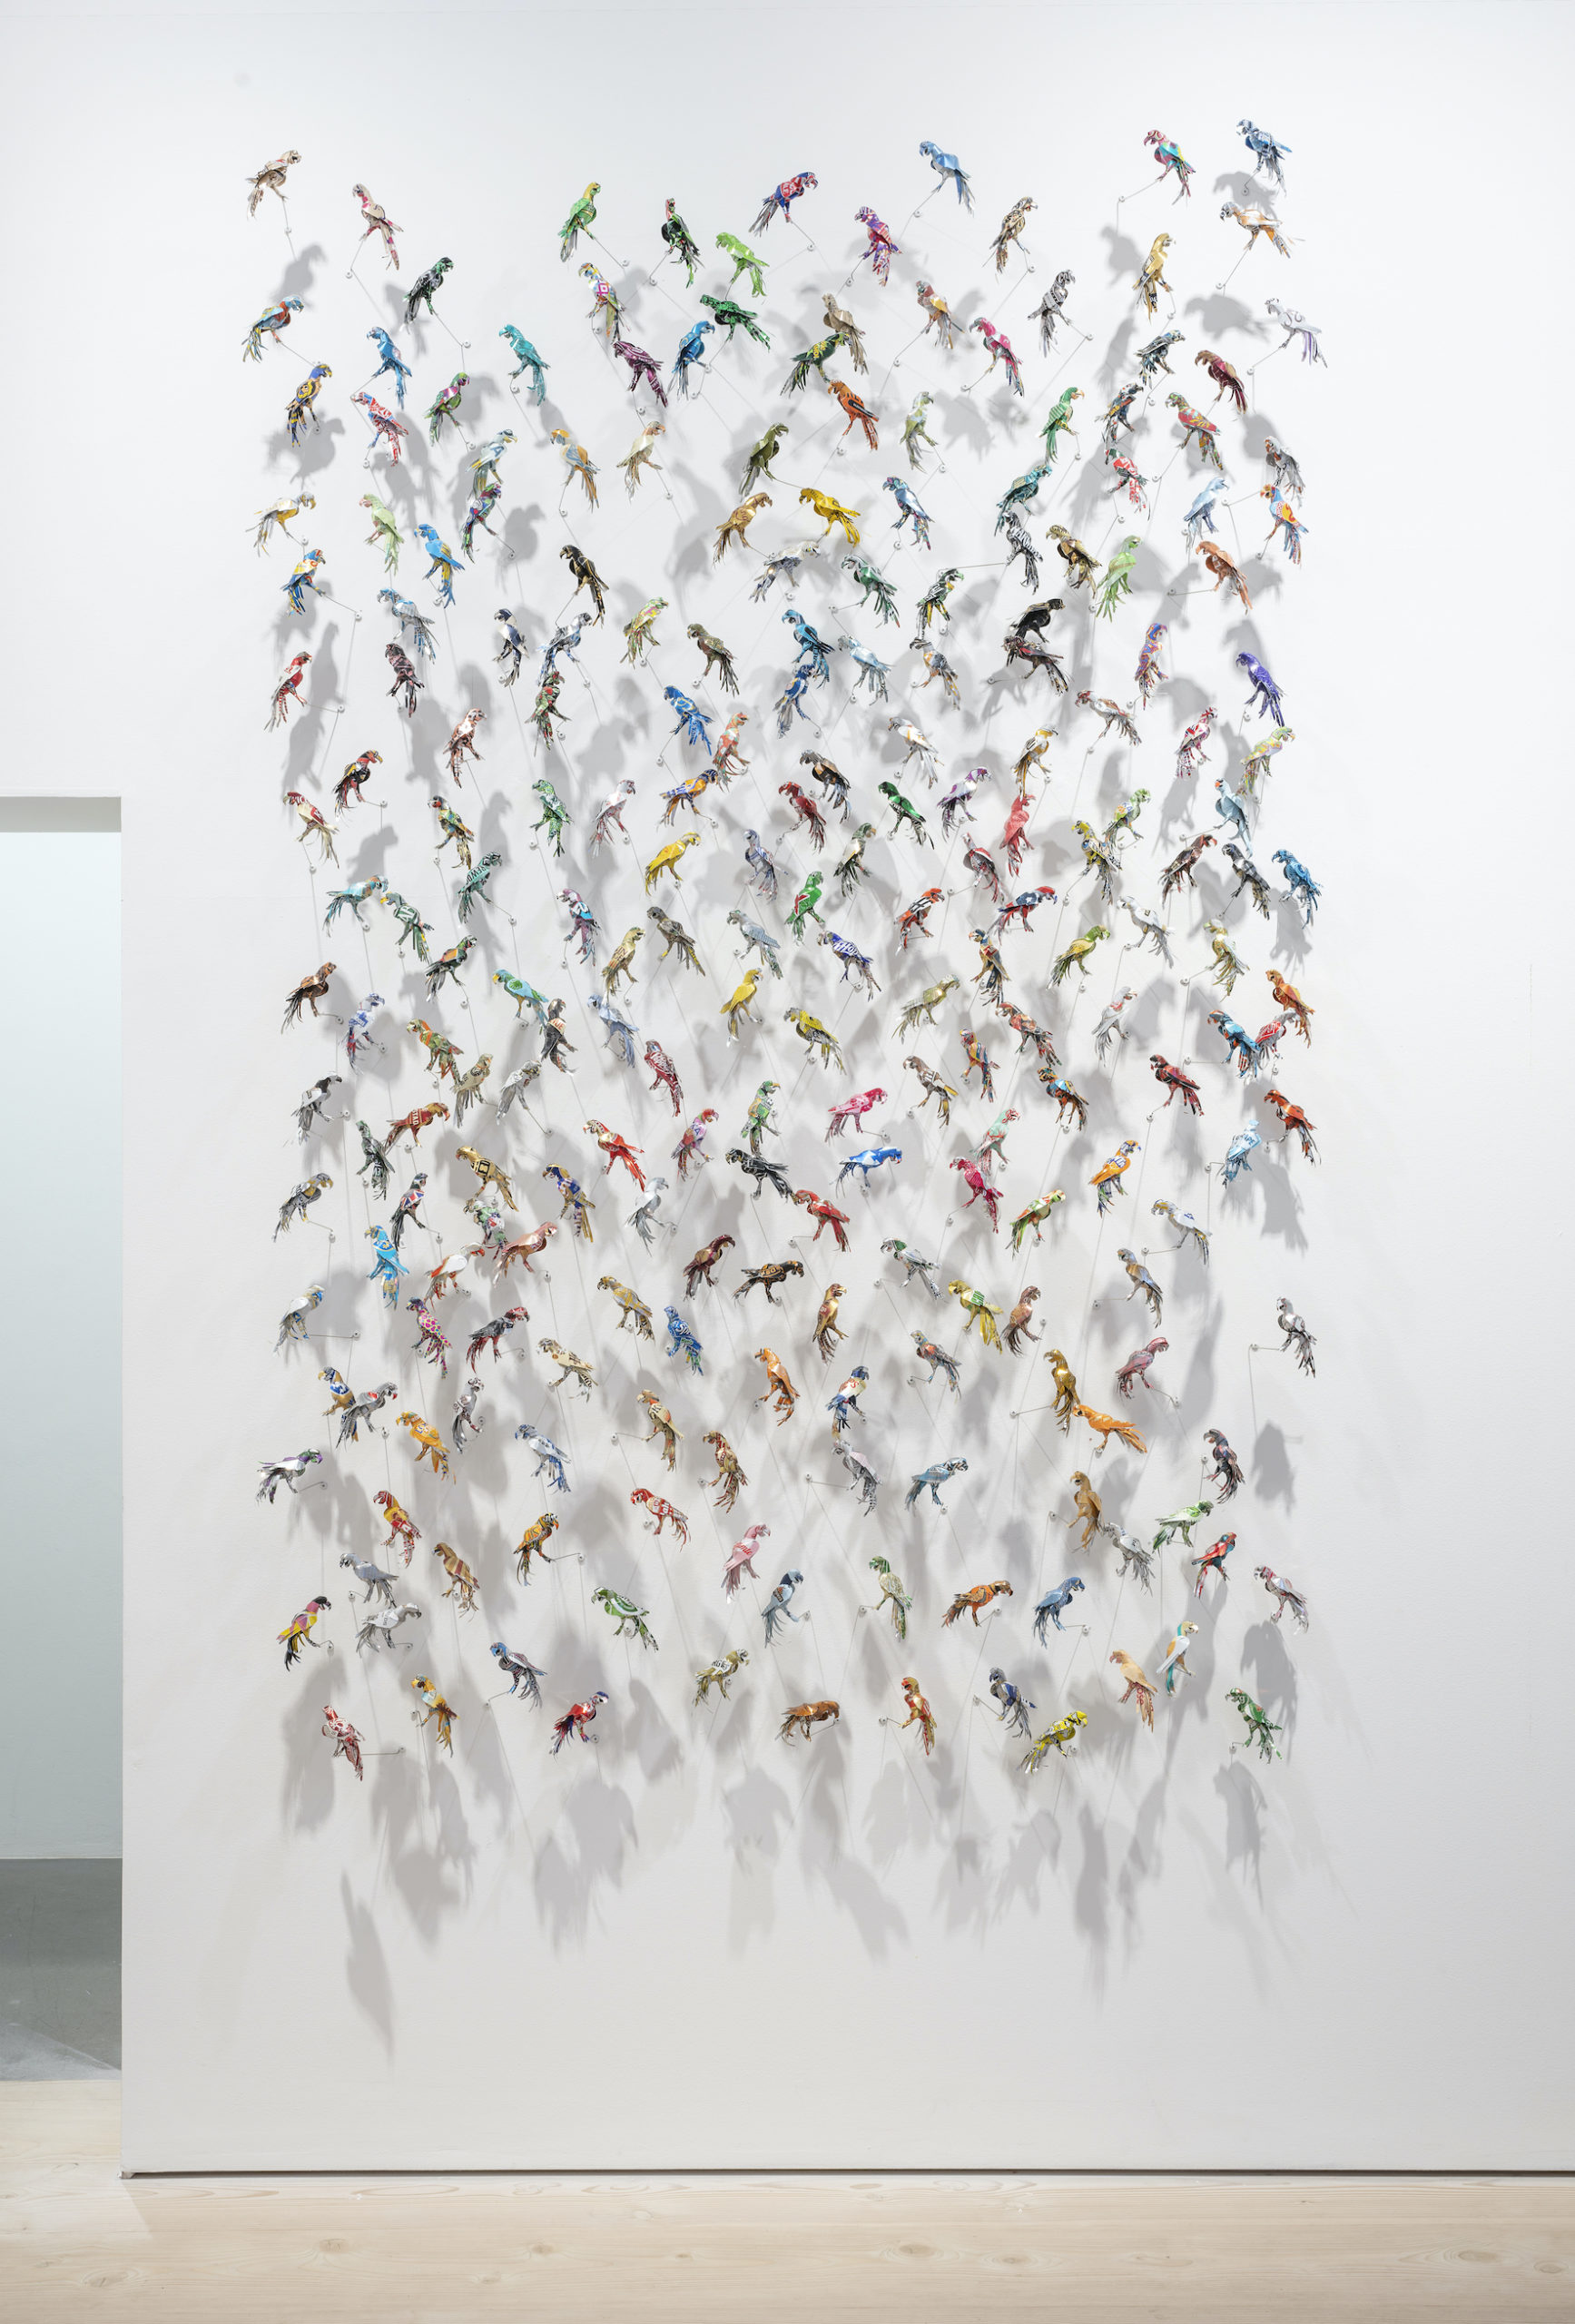  Bur(k)fåglar (Caged birds), 2017 - 2020
Aluminium cans, Each bird: 14 x 6 x 8 cm. Photo: Viktor Fordell